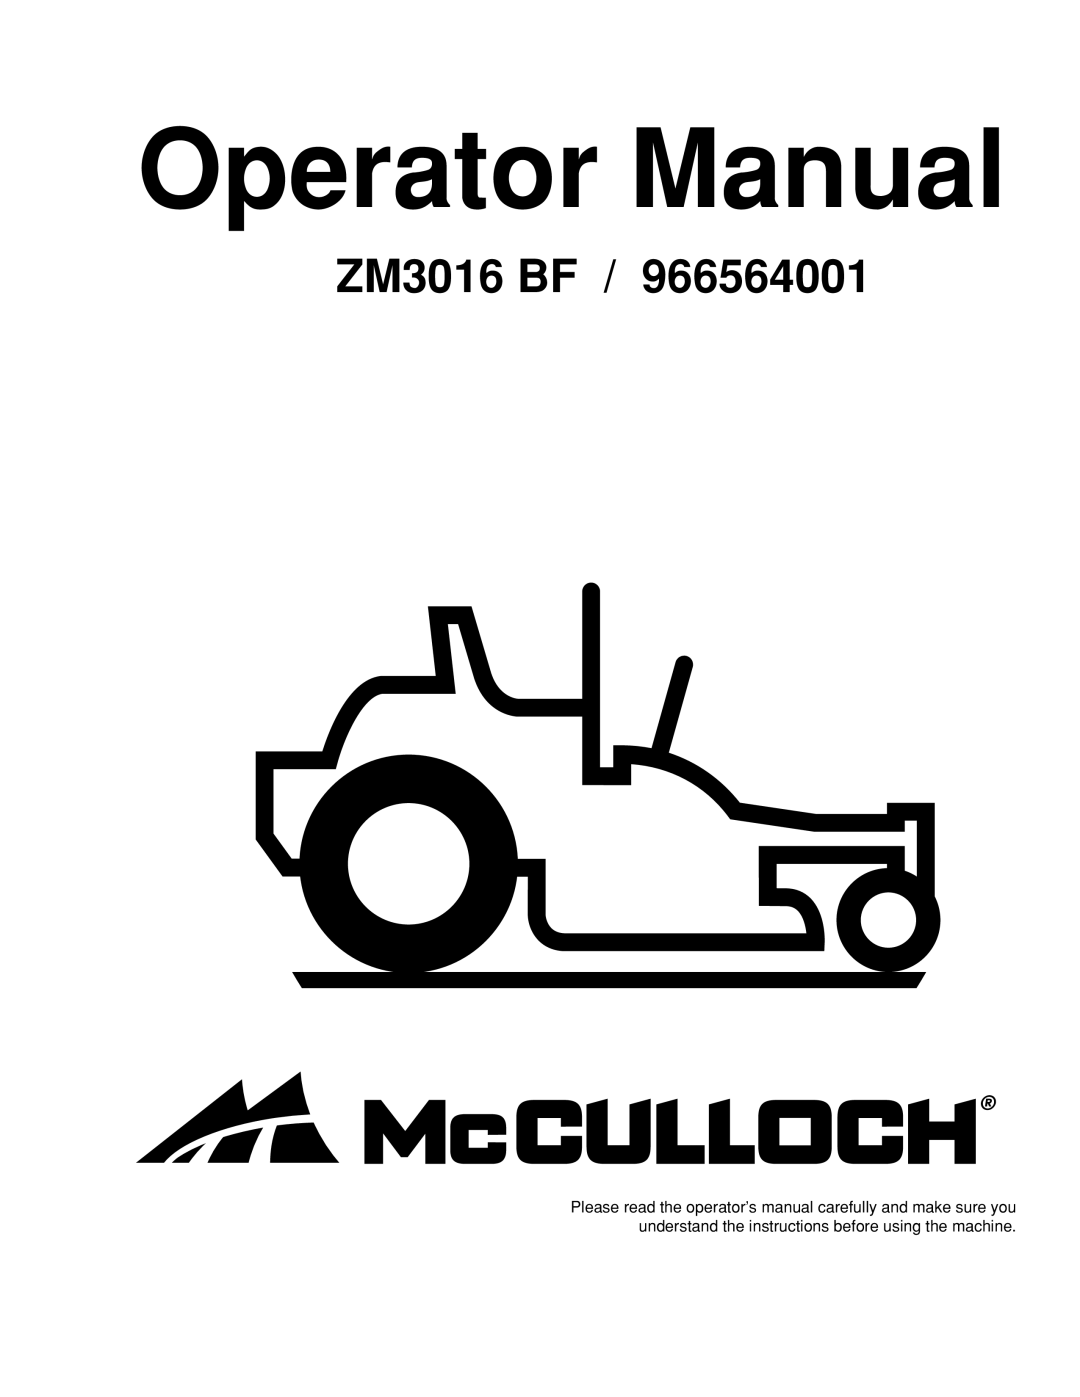 McCulloch 966564001 manual Operator Manual, ZM3016 BF 